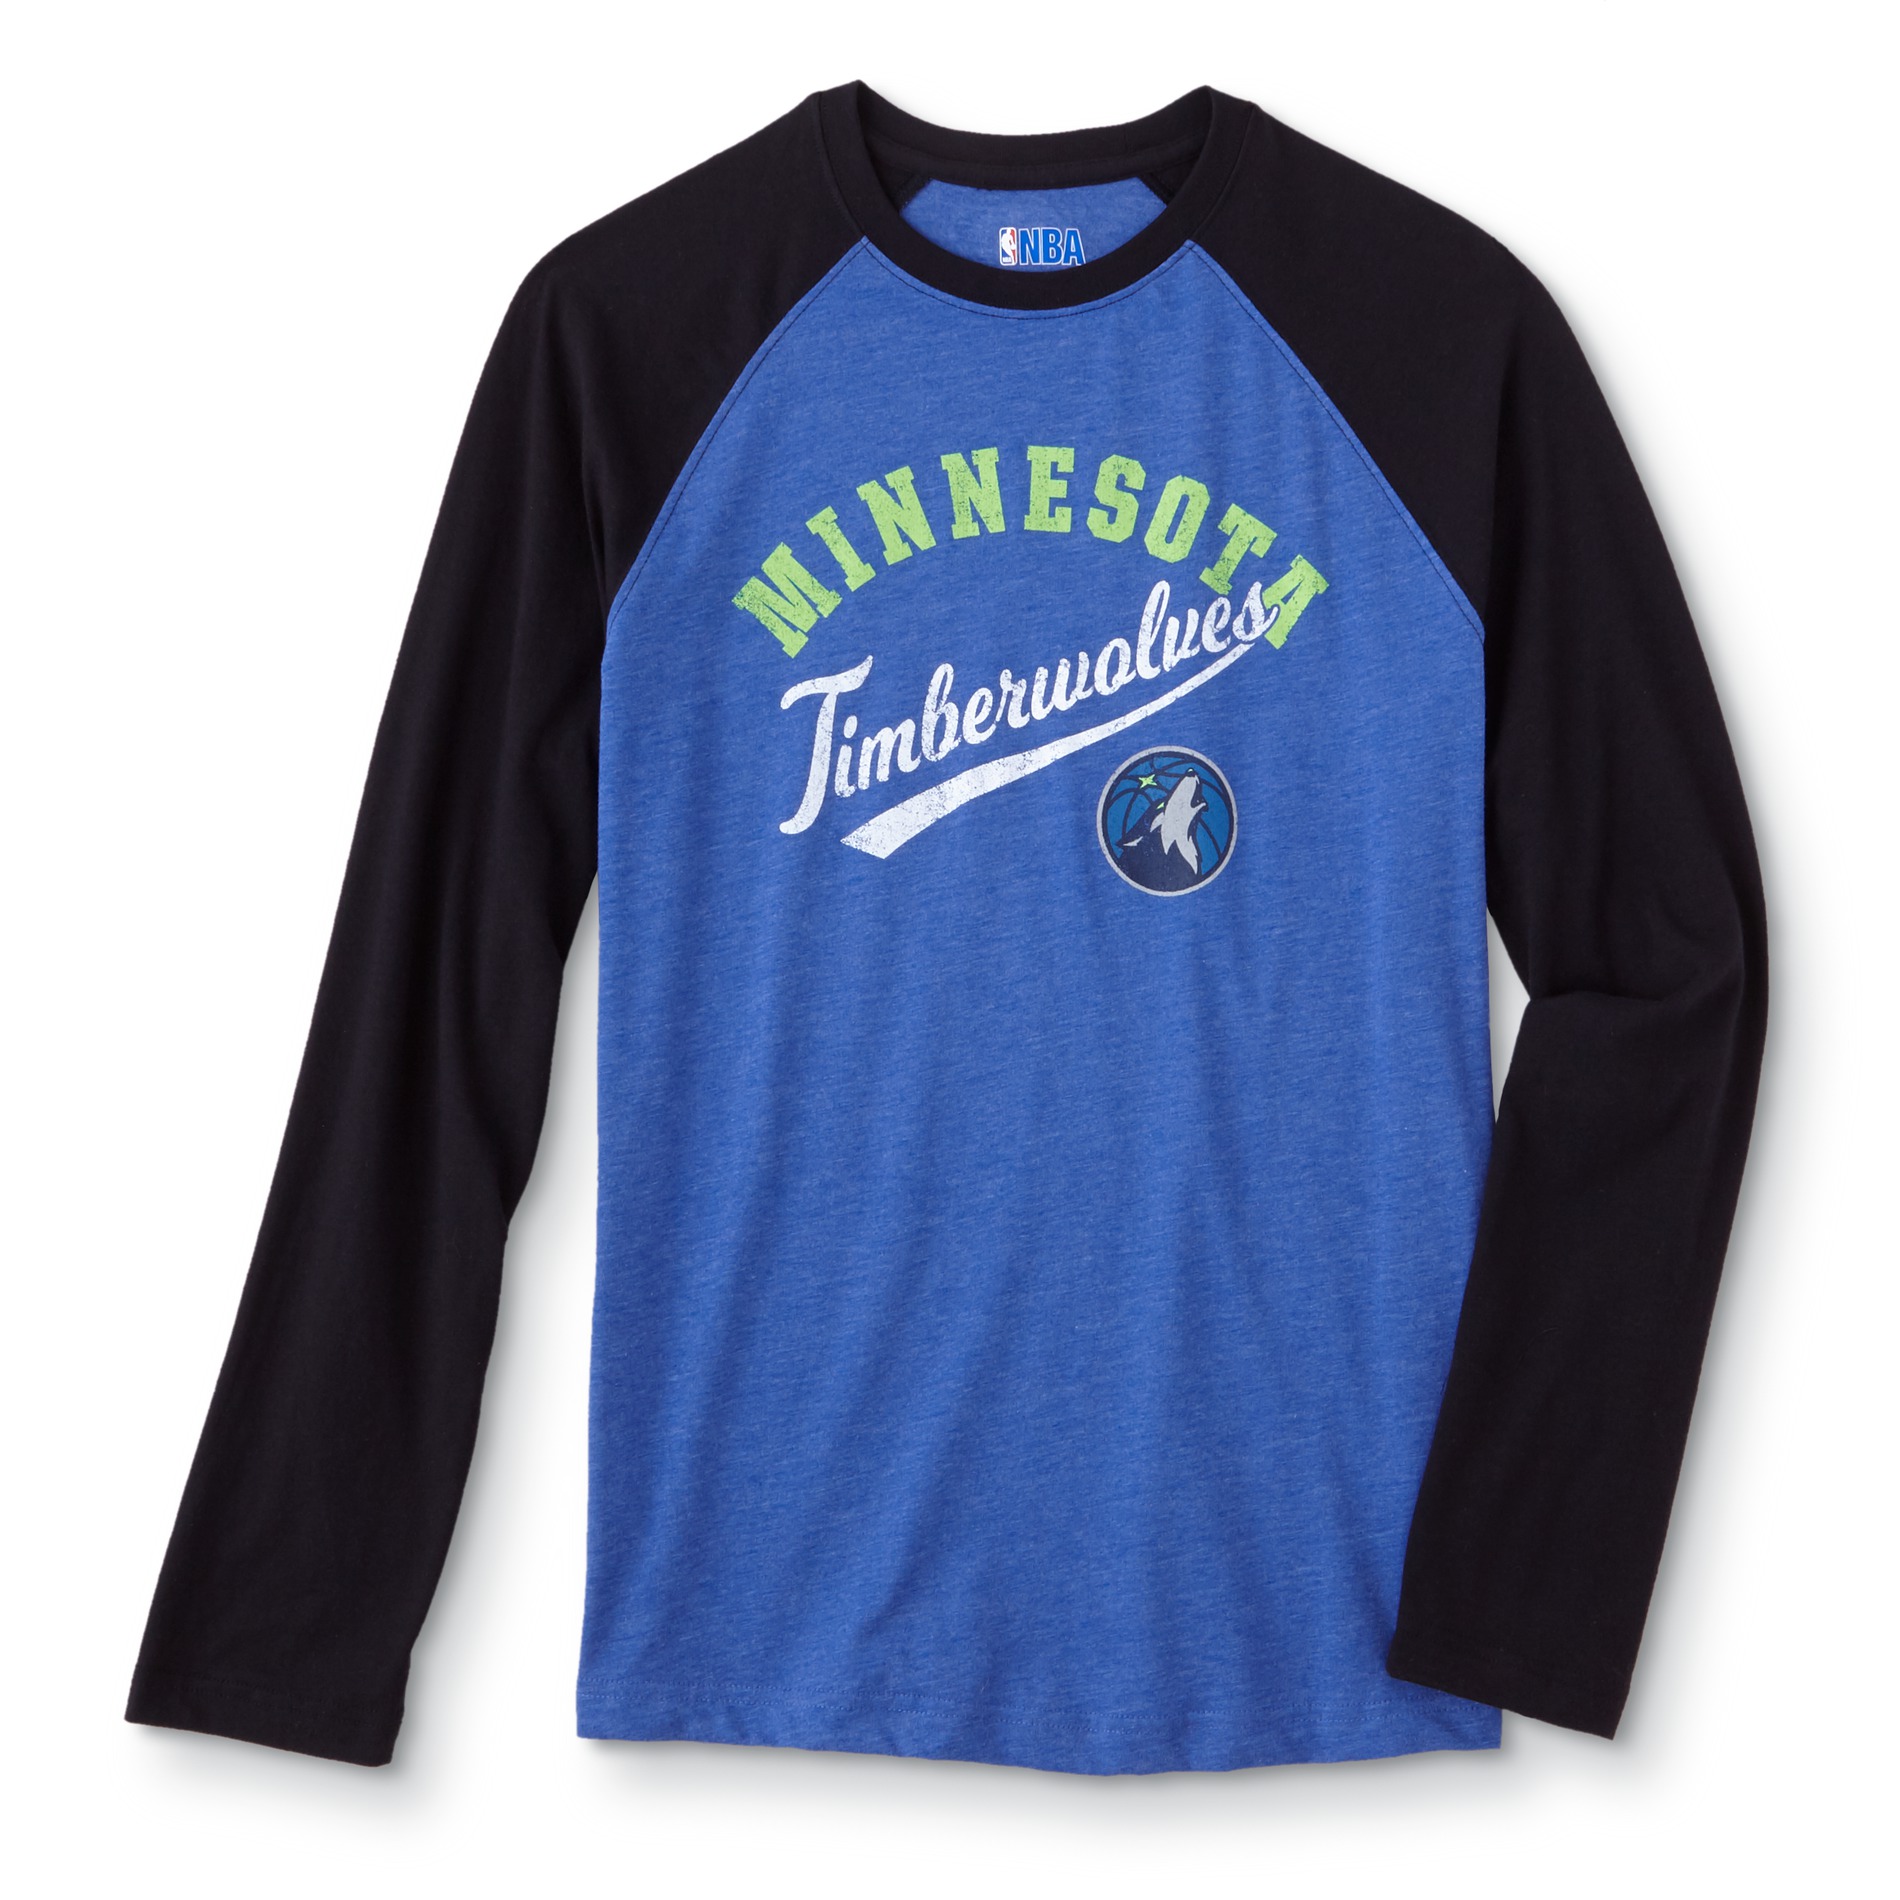 Minnesota Timberwolves Apparel: Buy 